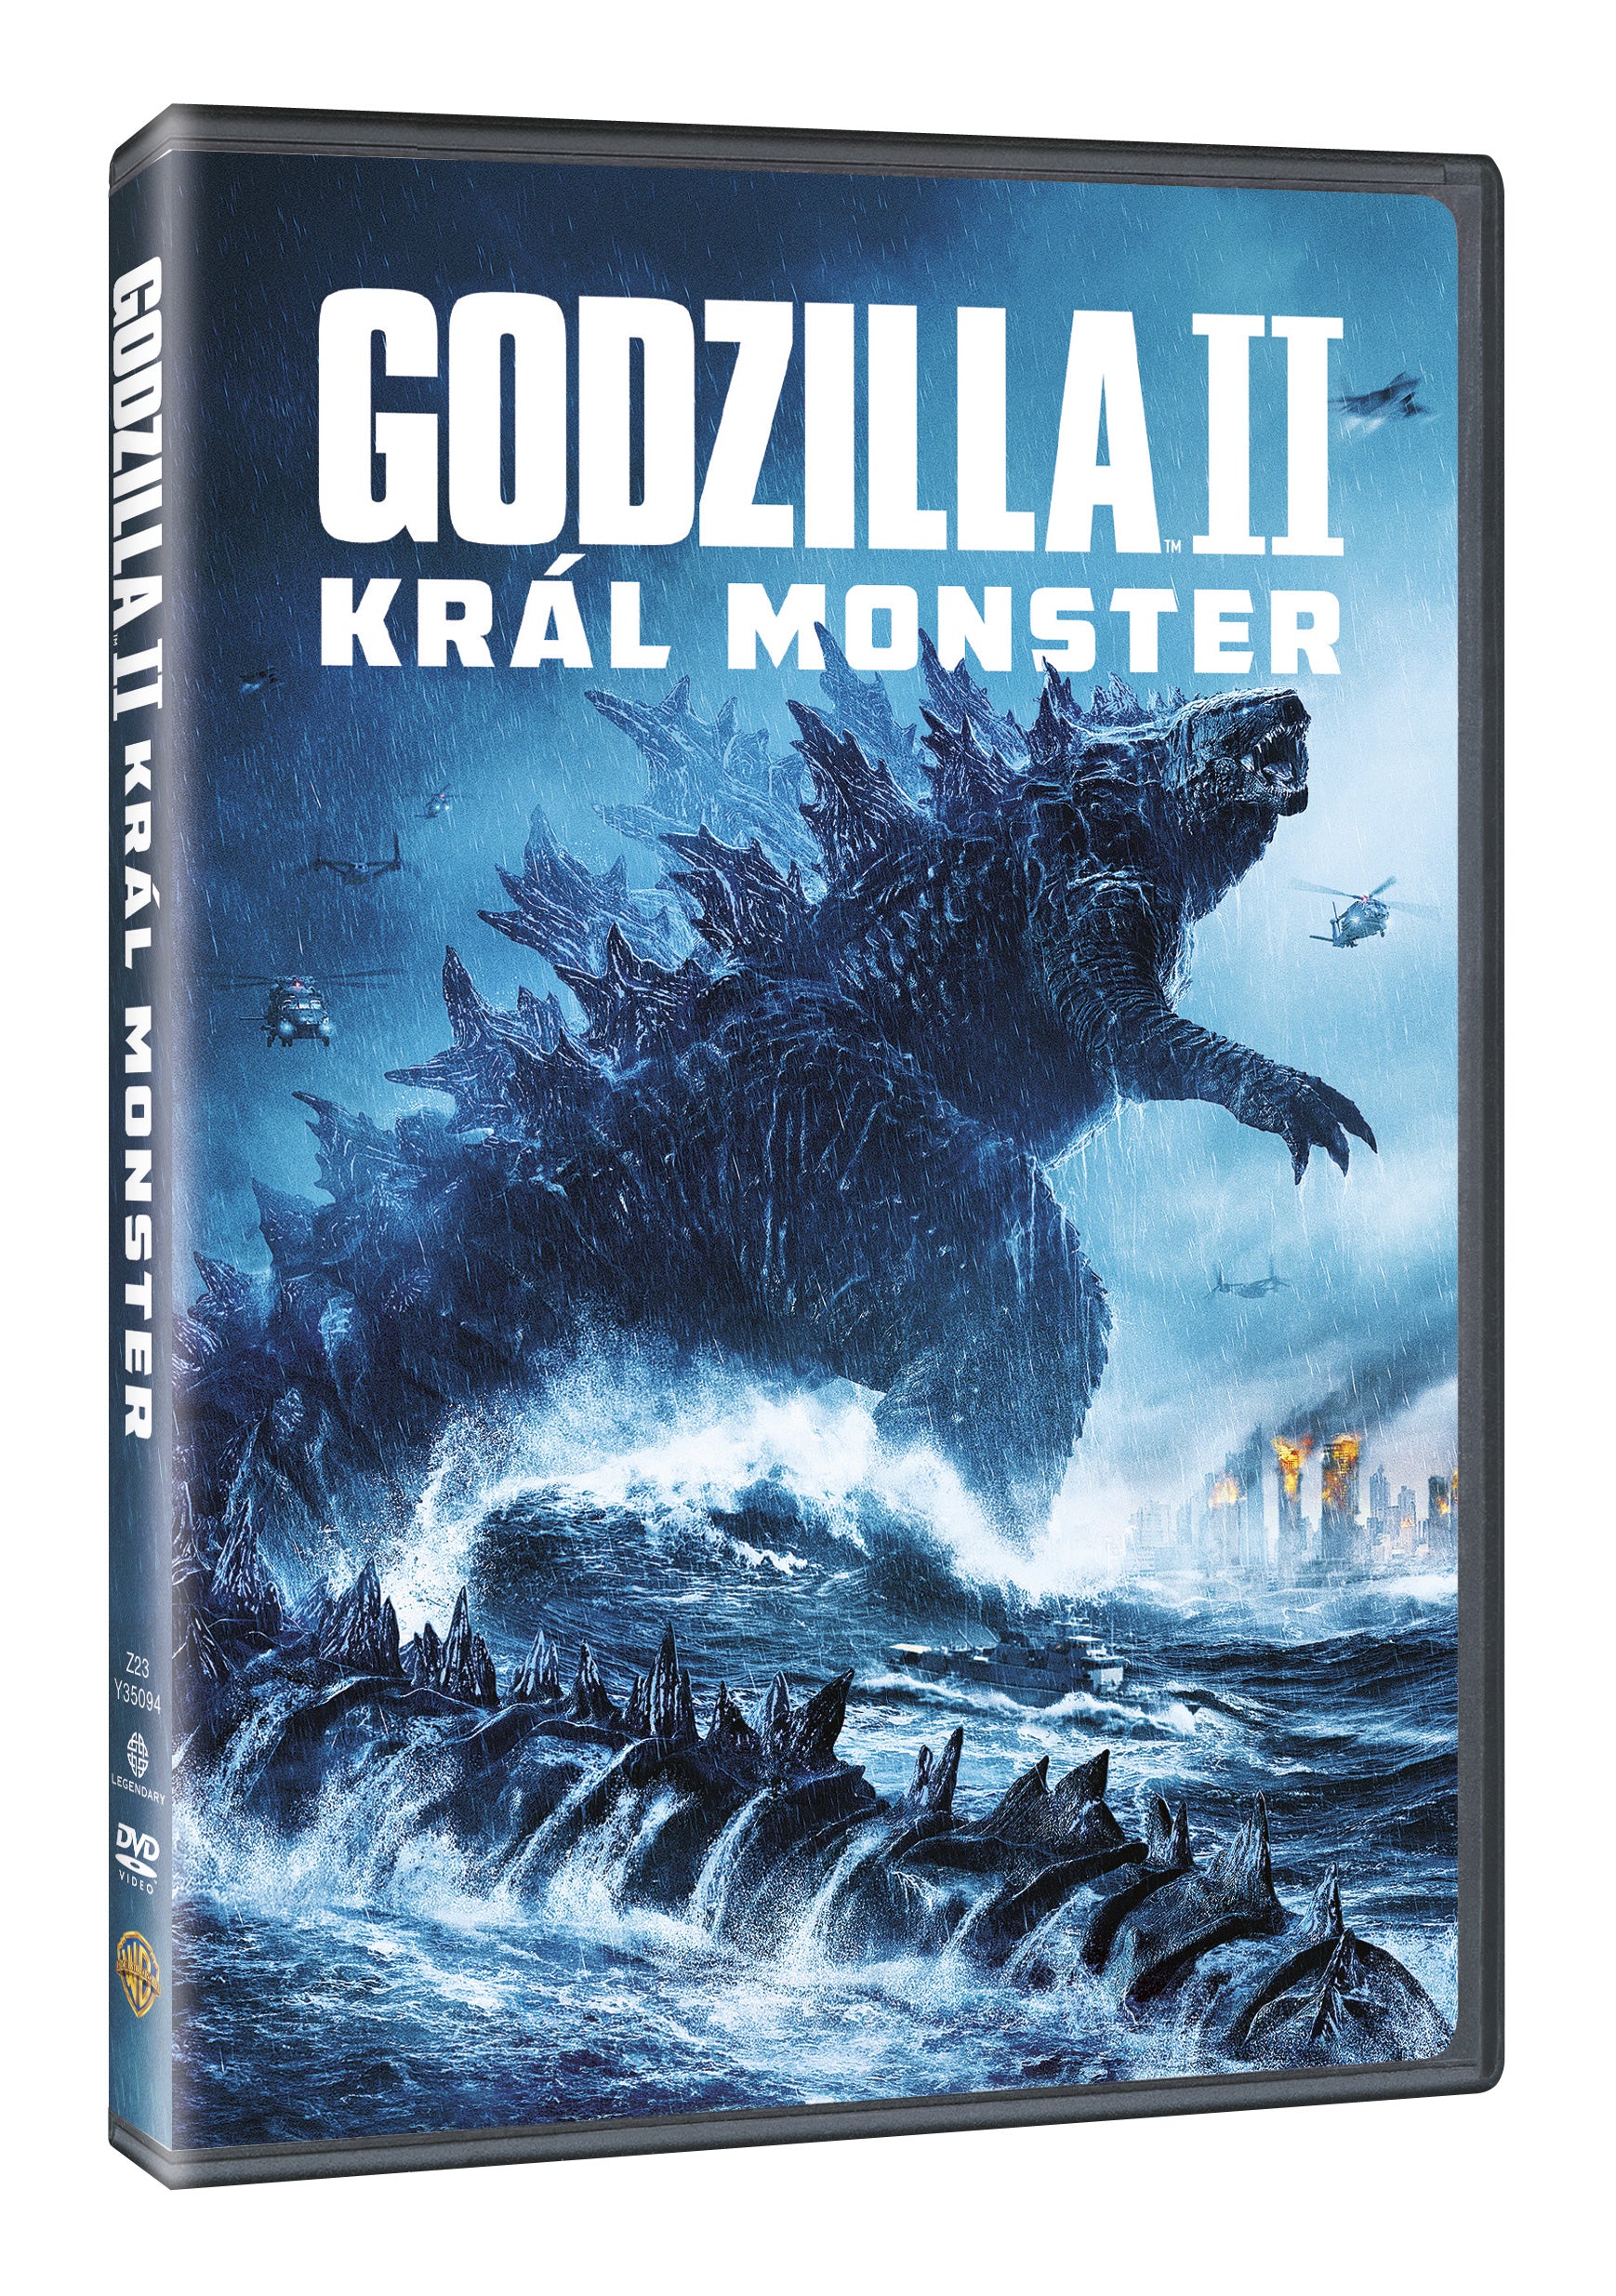 Godzilla II Kral monster DVD / Godzilla: King of the Monsters